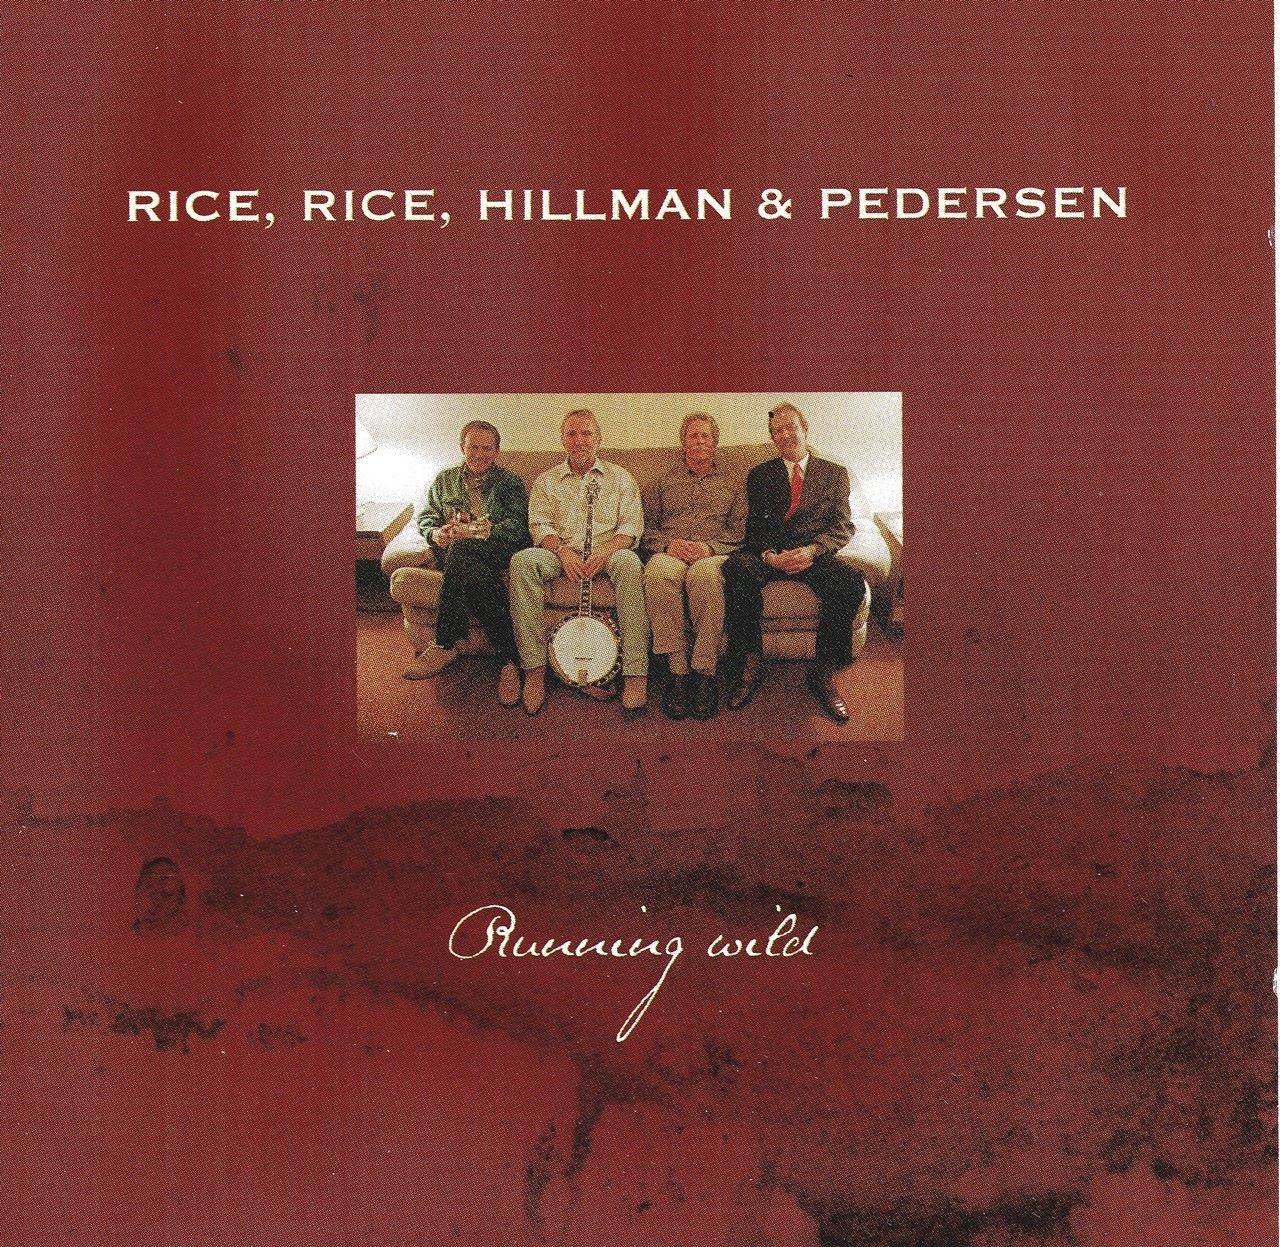 Tony Rice, Larry Rice, Chris Hillman & Herb Pedersen - Running Wild cover album